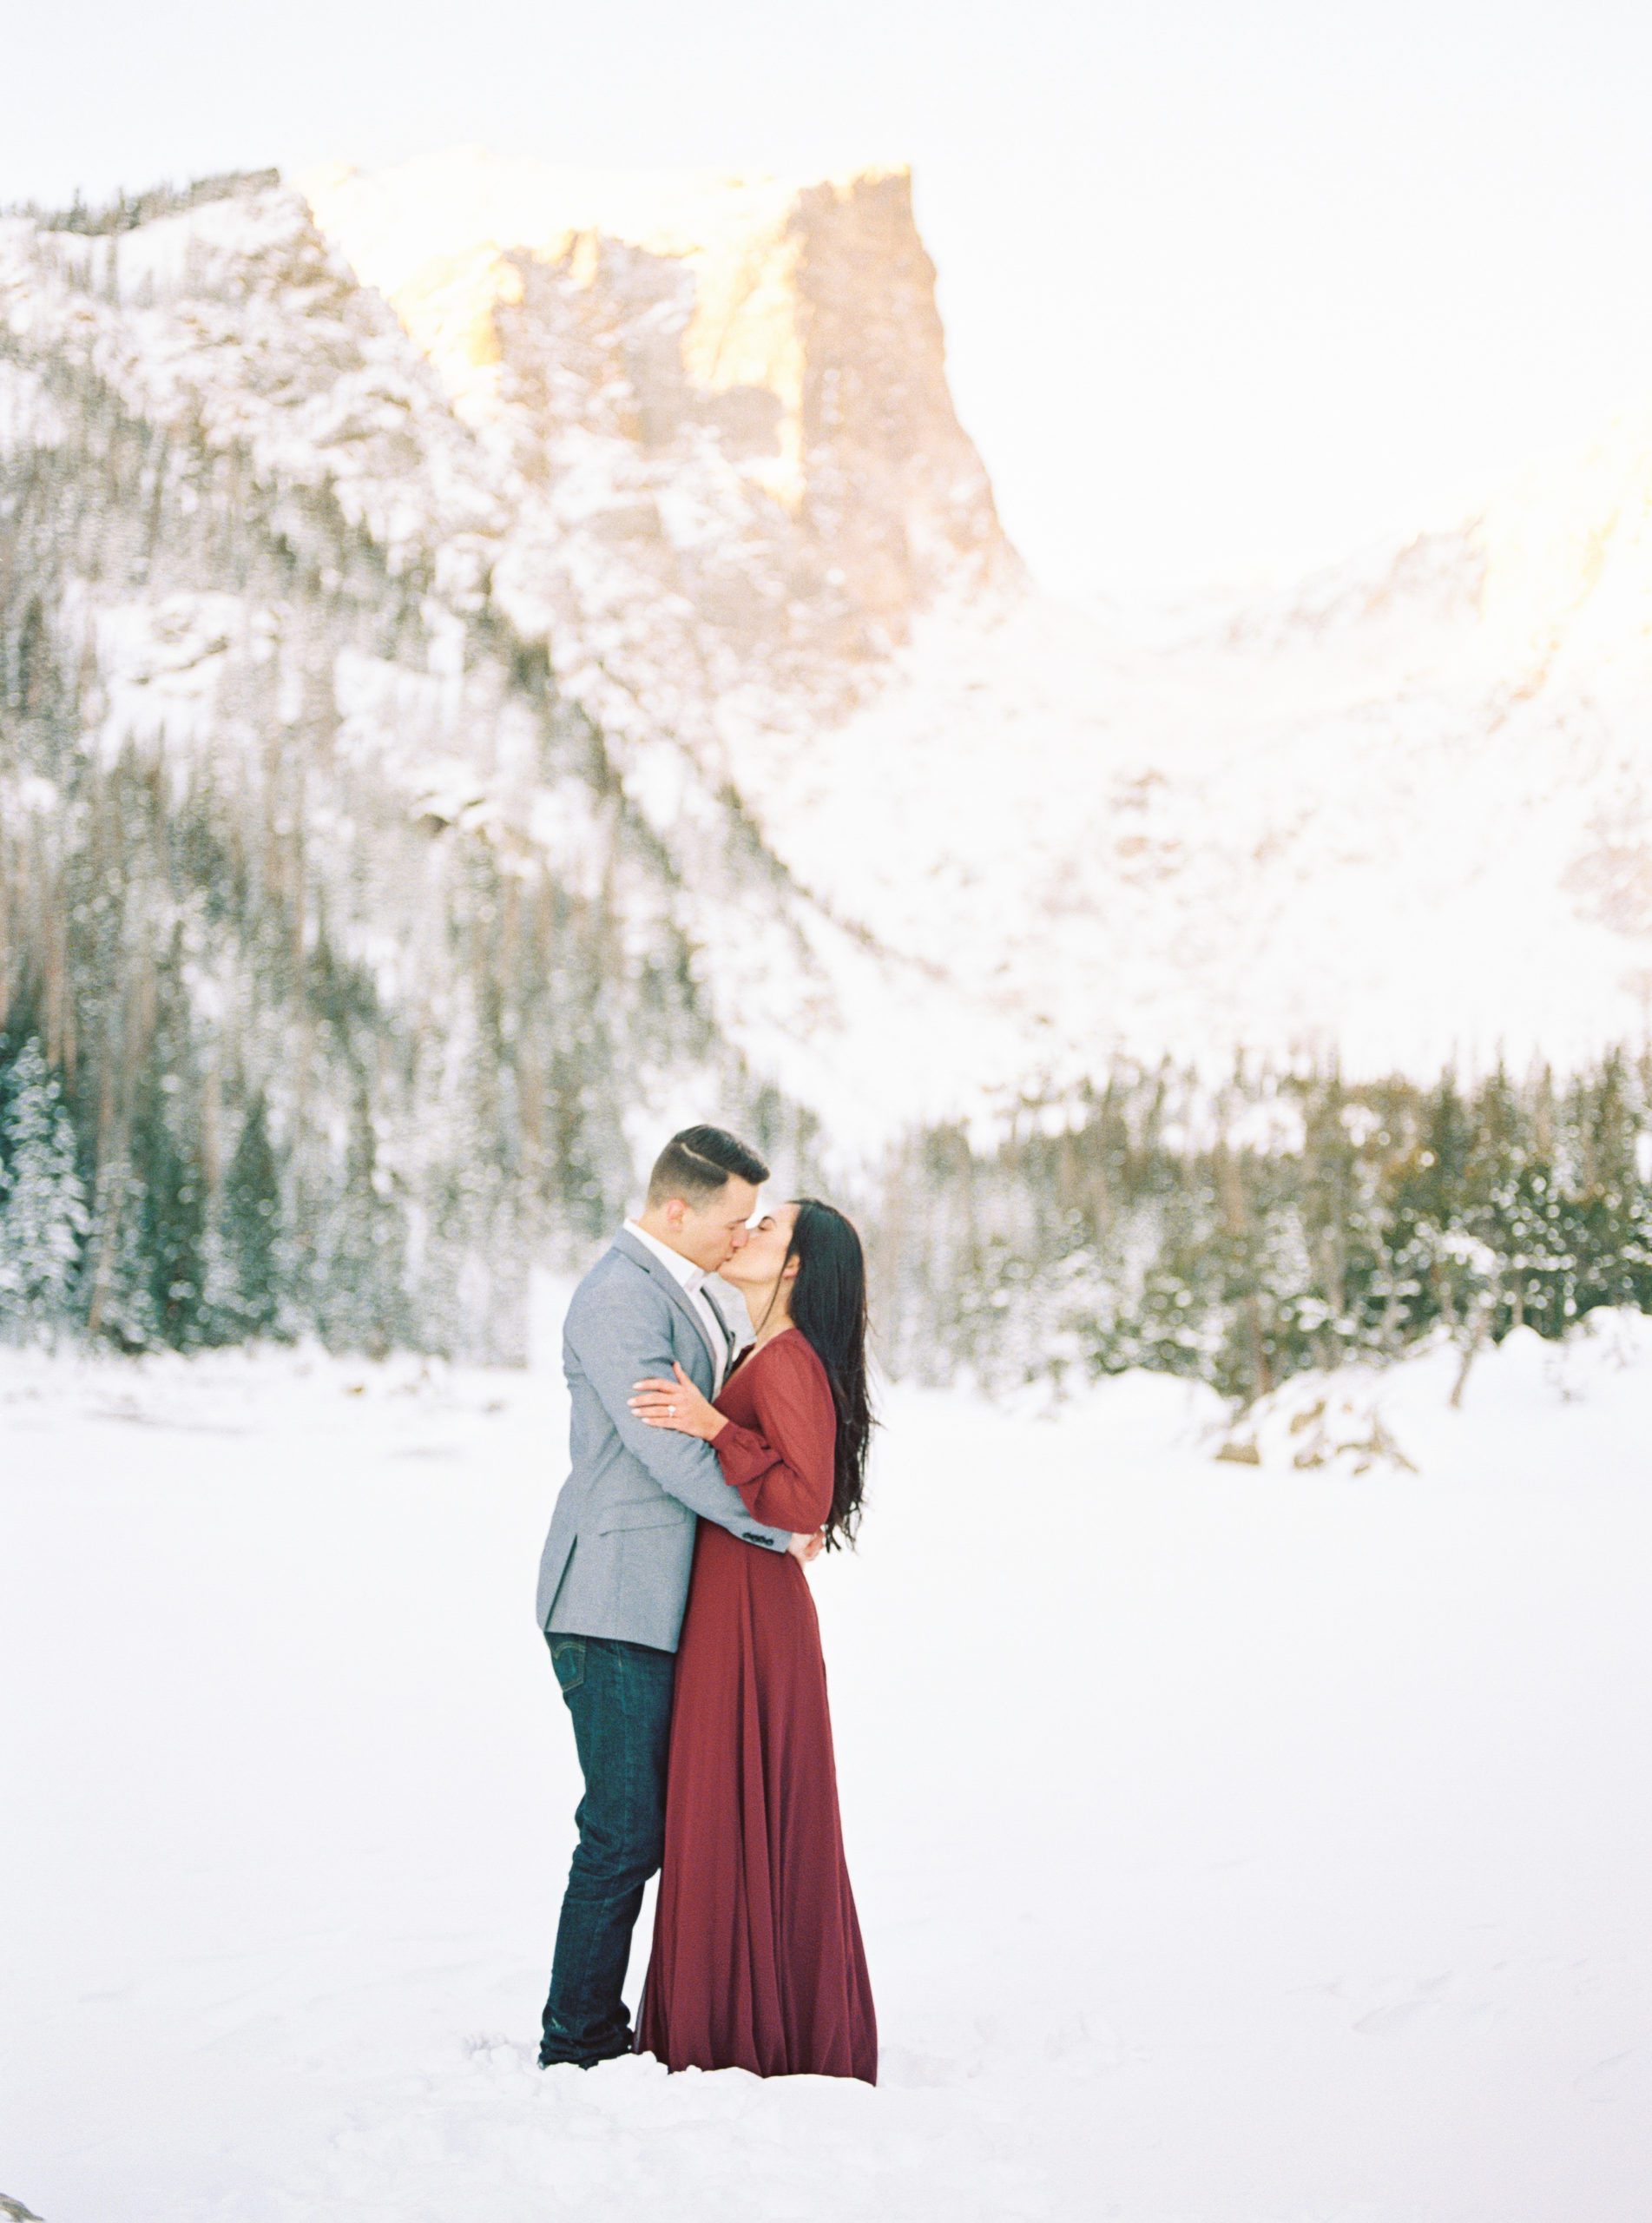 Film image of couple in winter mountain scene in Estes Park